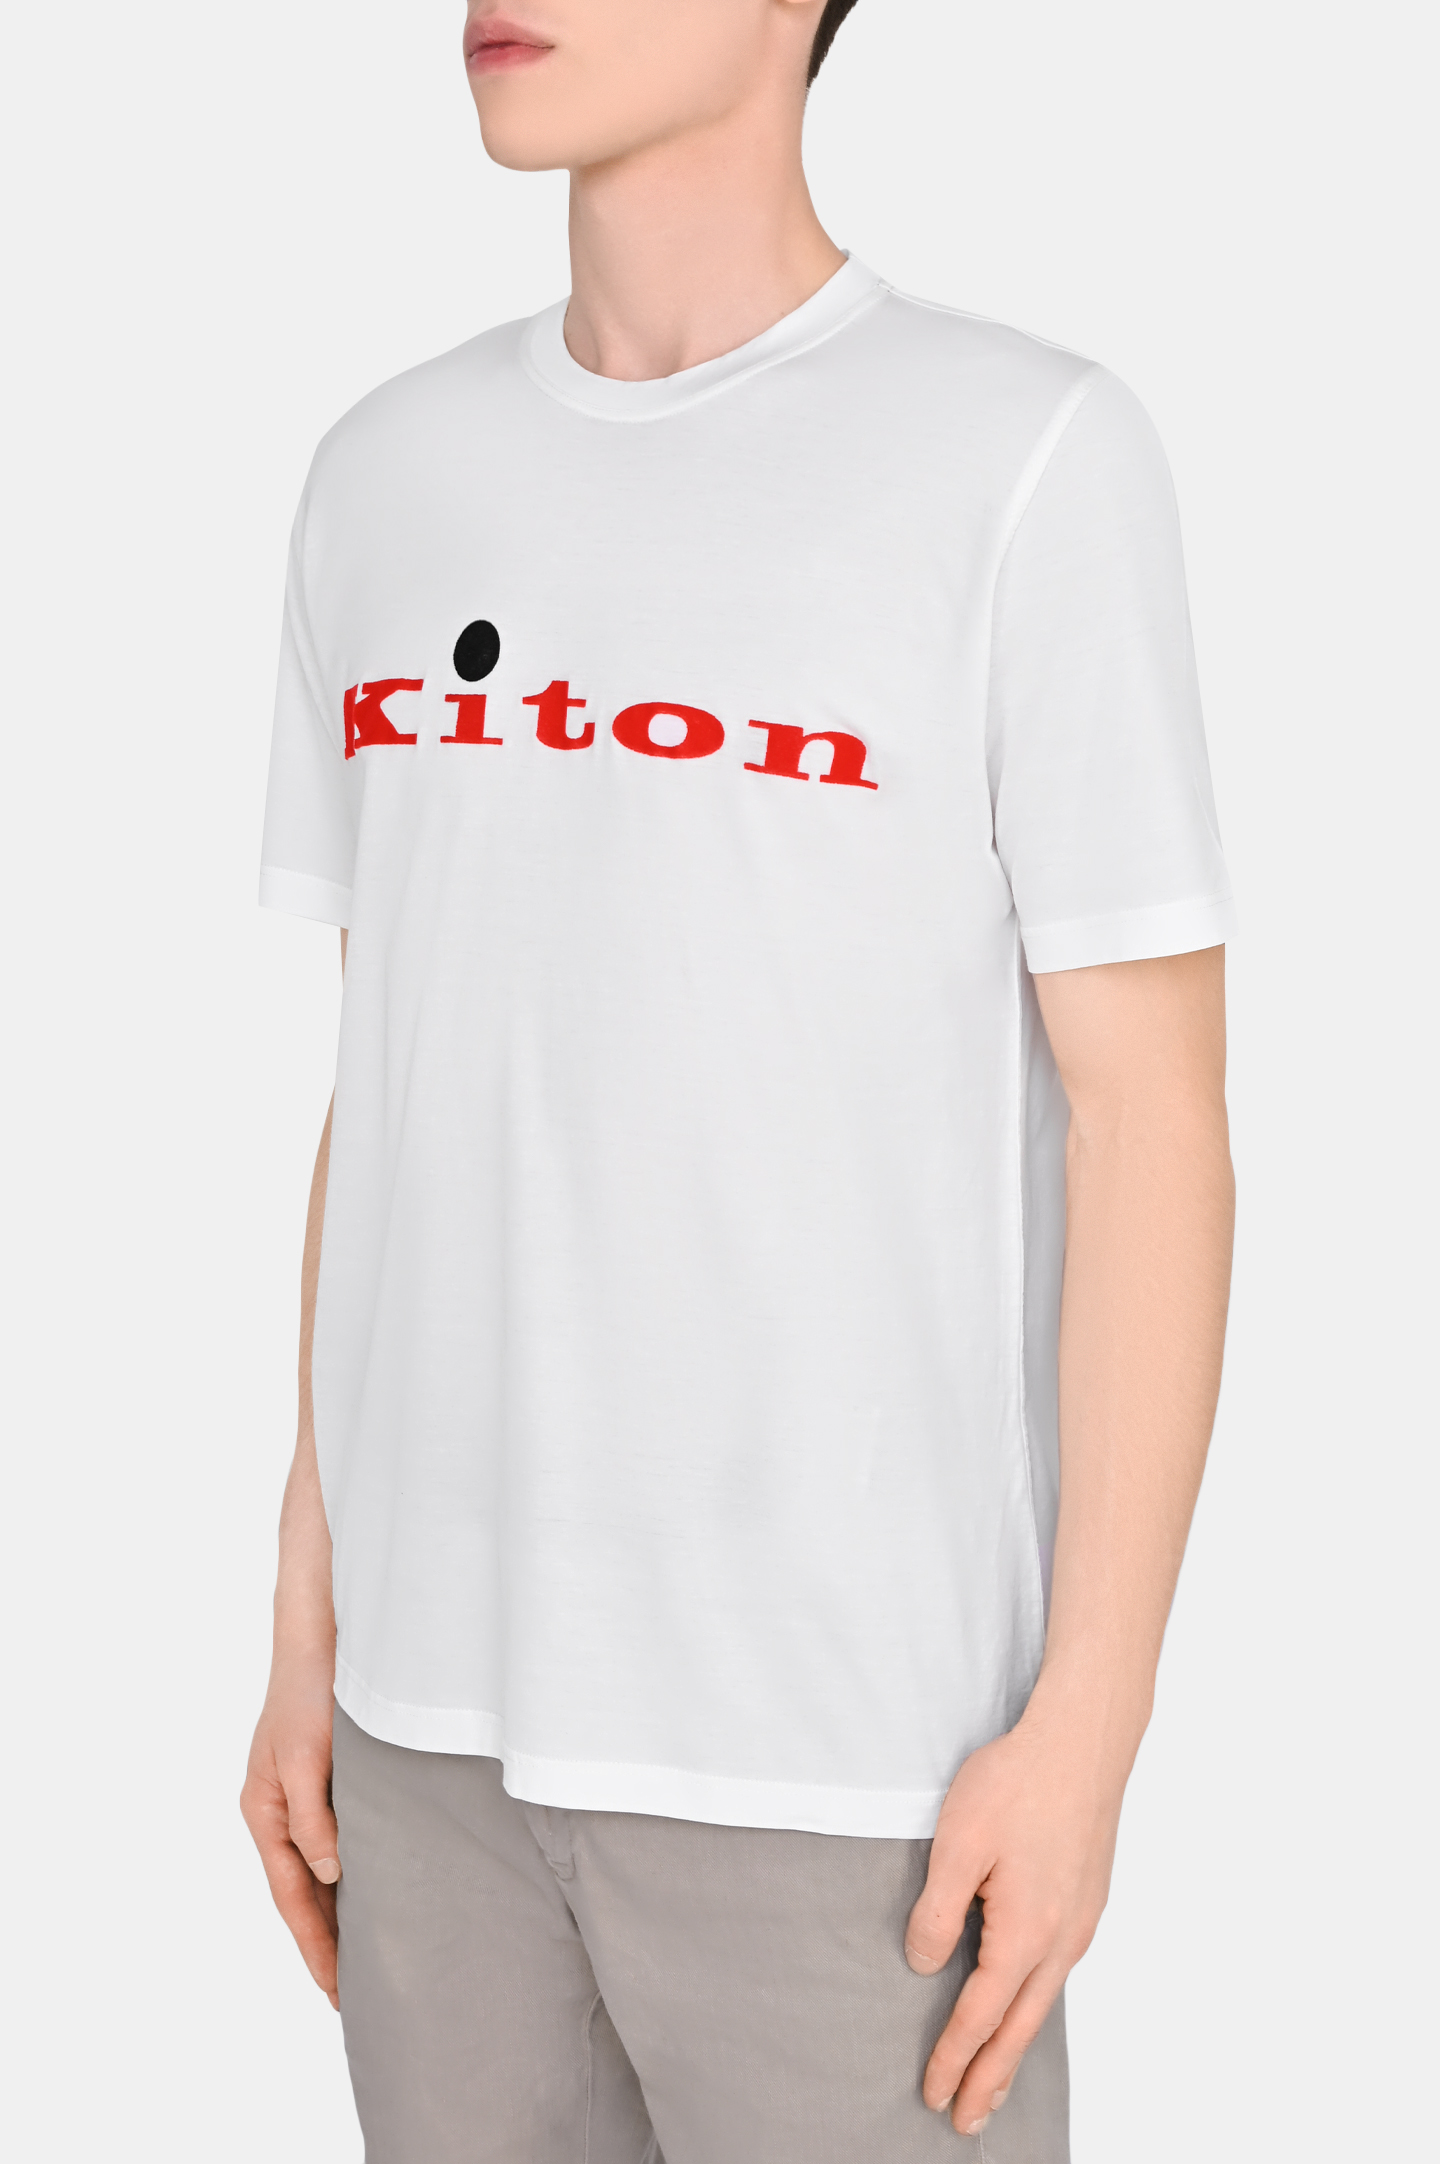 Футболка KITON UK1164E23, цвет: Белый, Мужской